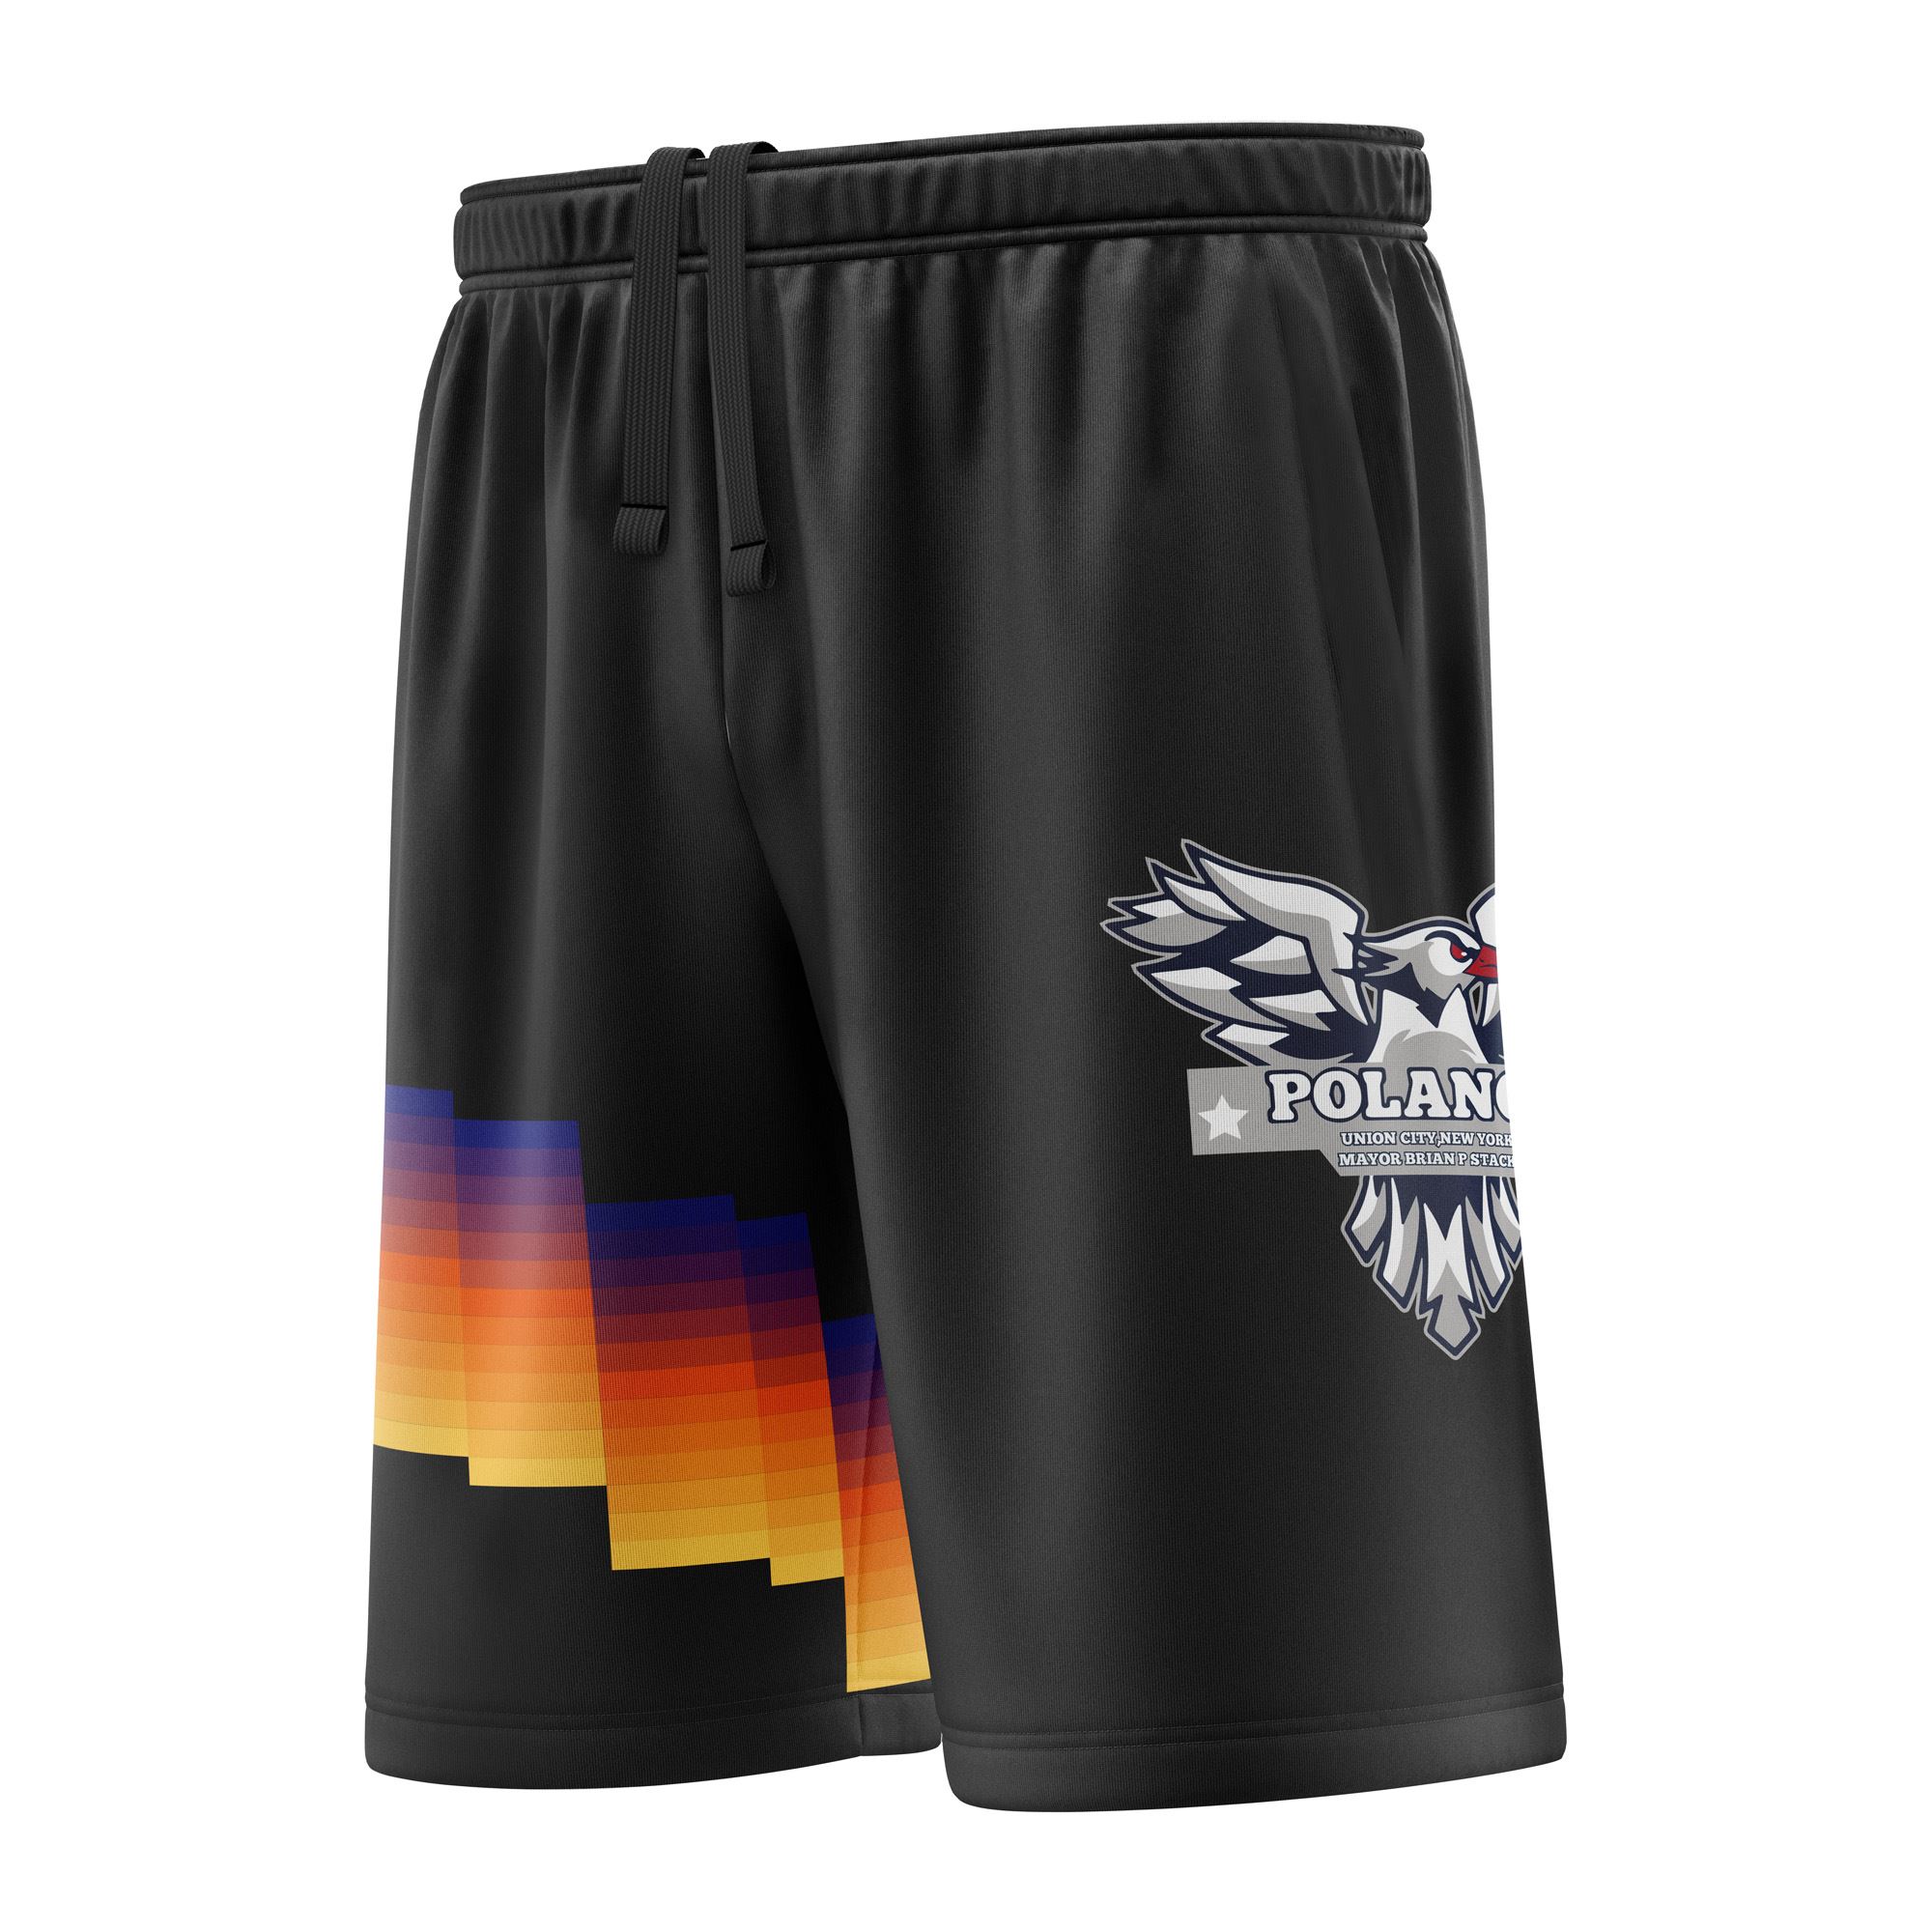 Full Dye Sub Basketball Shorts - Varsity Pattern - left view